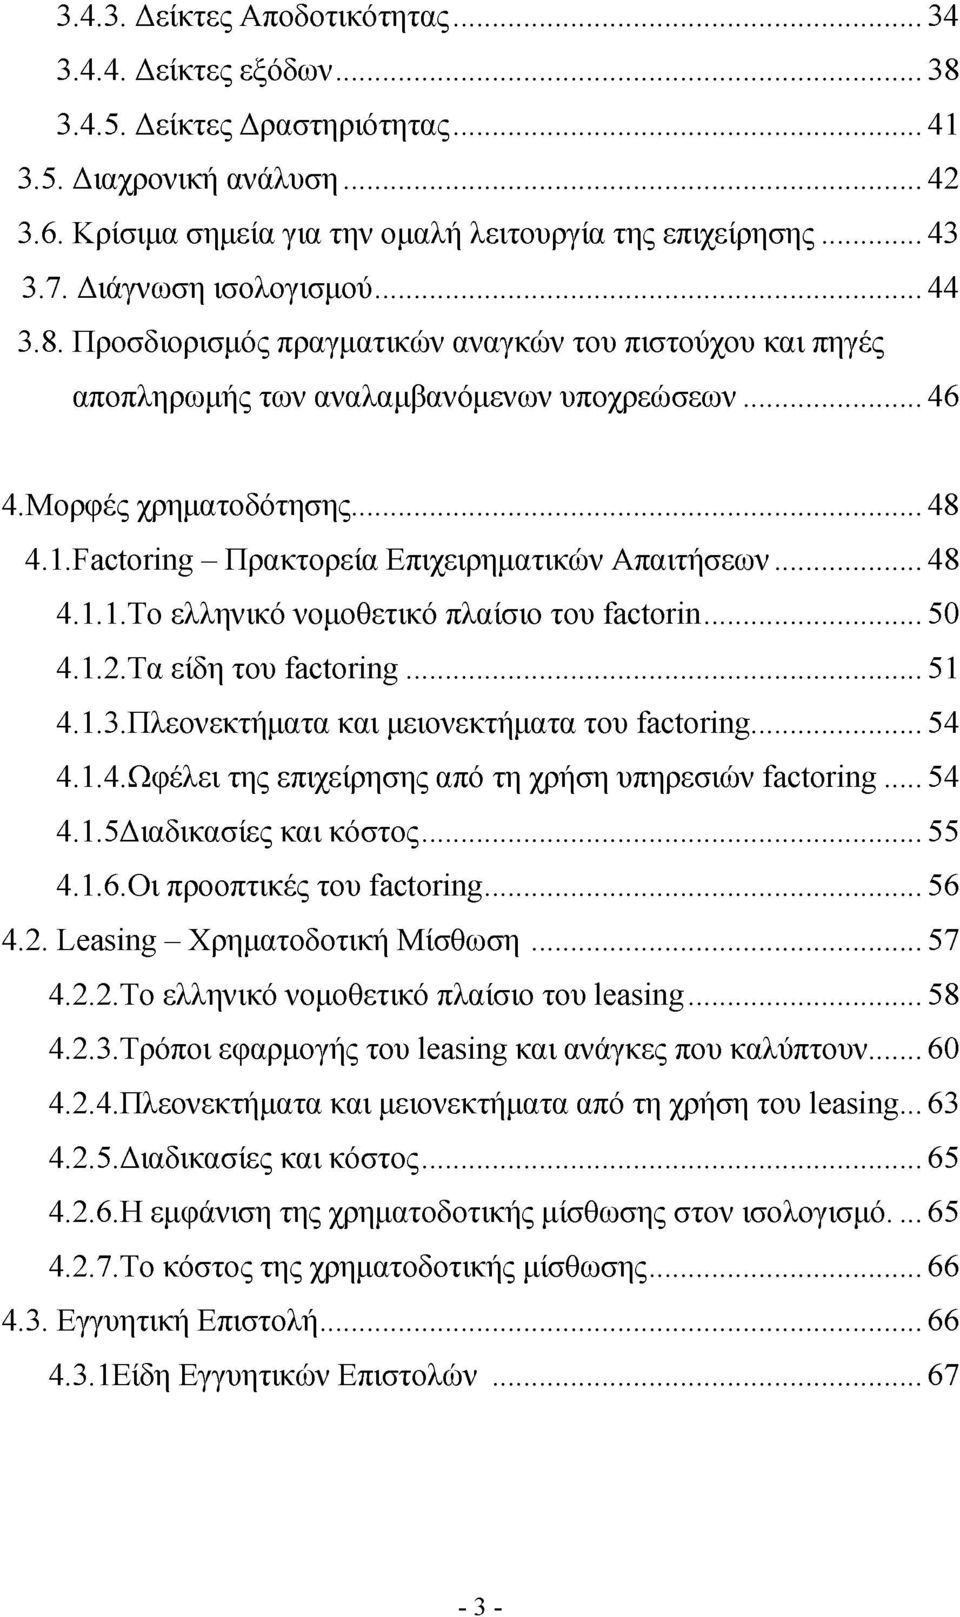 Factoring - Πρακτορεία Επιχειρηματικών Απαιτήσεων...48 4.1.1. Το ελληνικό νομοθετικό πλαίσιο του factorin...50 4.1.2. Τα είδη του factoring... 51 4.1.3. Πλεονεκτήματα και μειονεκτήματα του factoring.